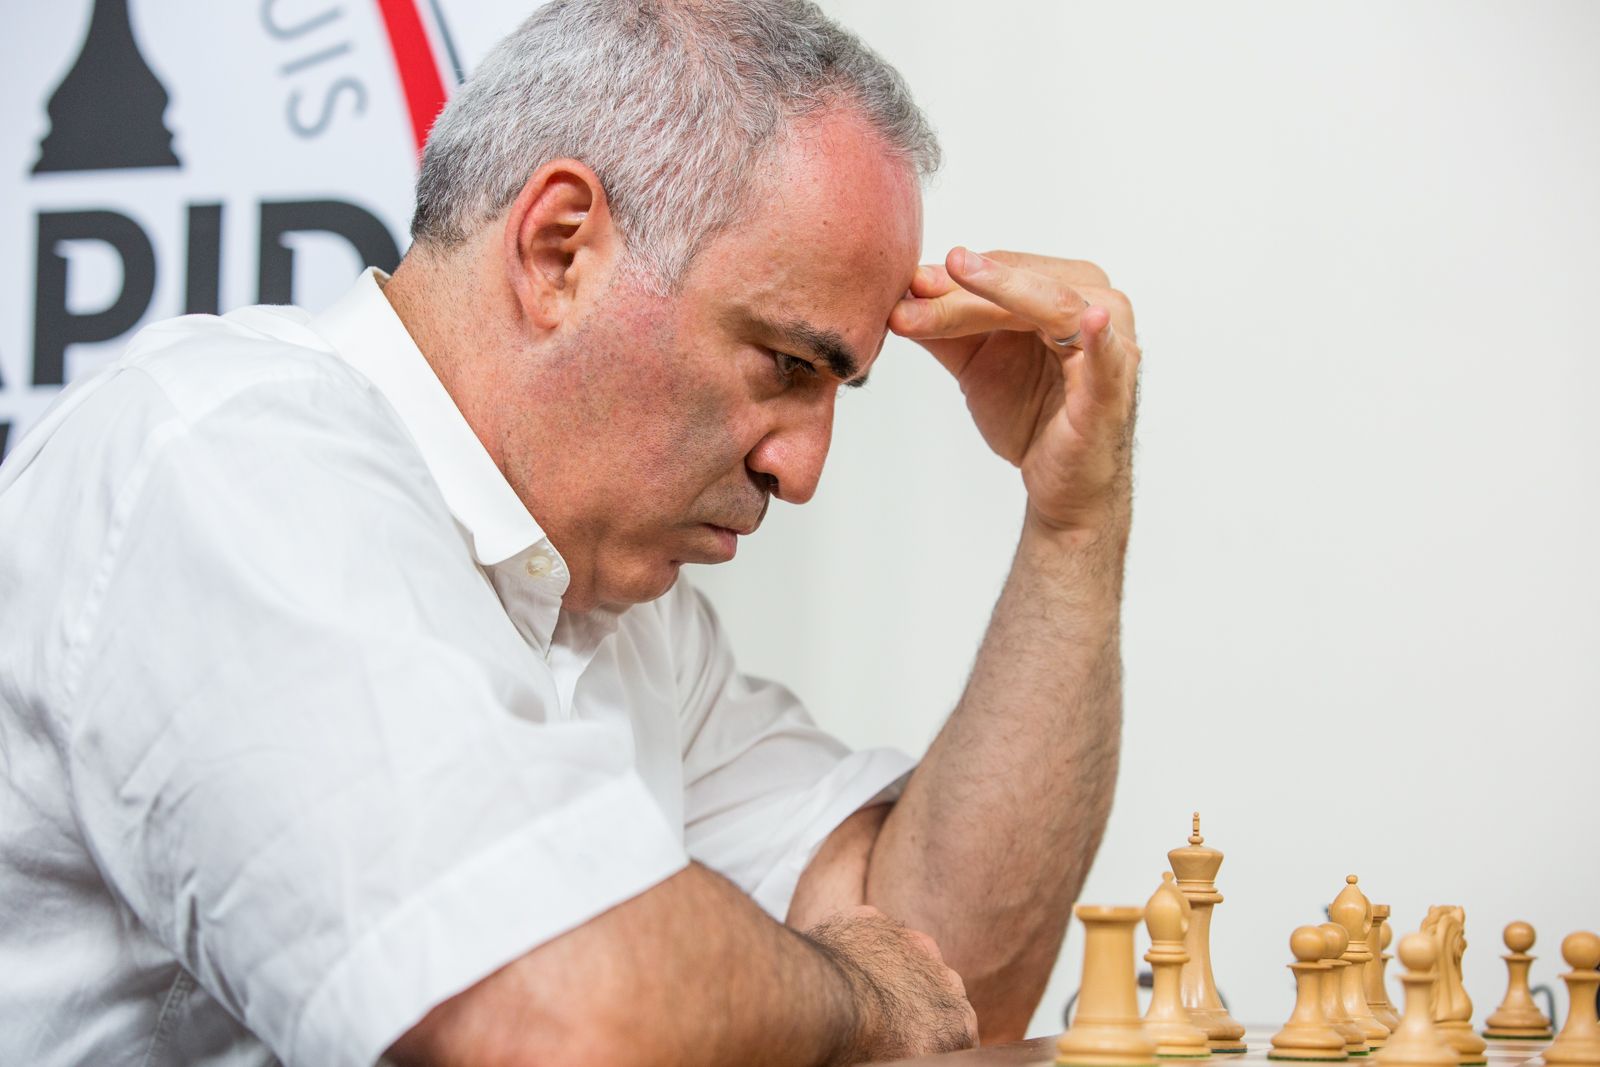 Endgame Riddle: Did Kasparov miss a chance?